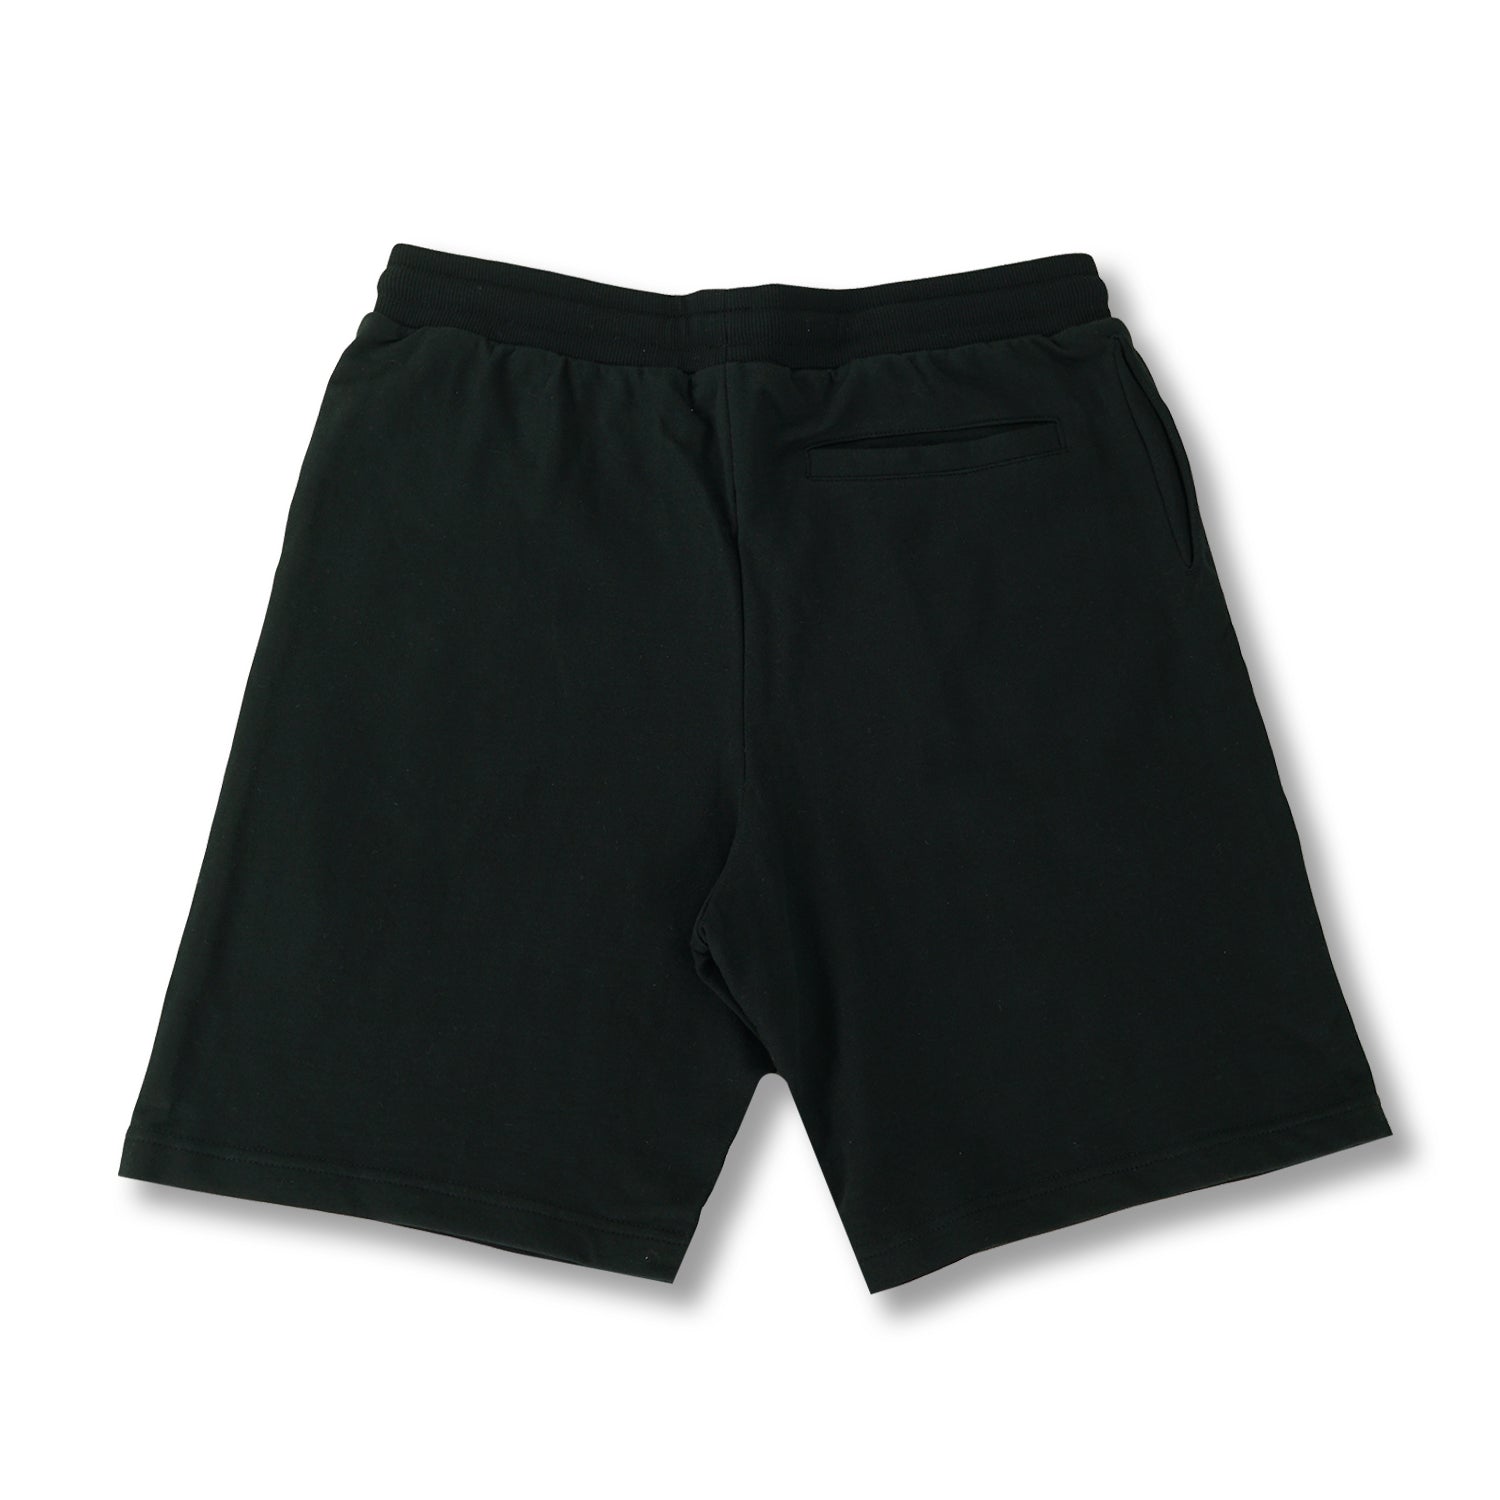 Shop Men's Pants, Joggers, Shorts & Briefs